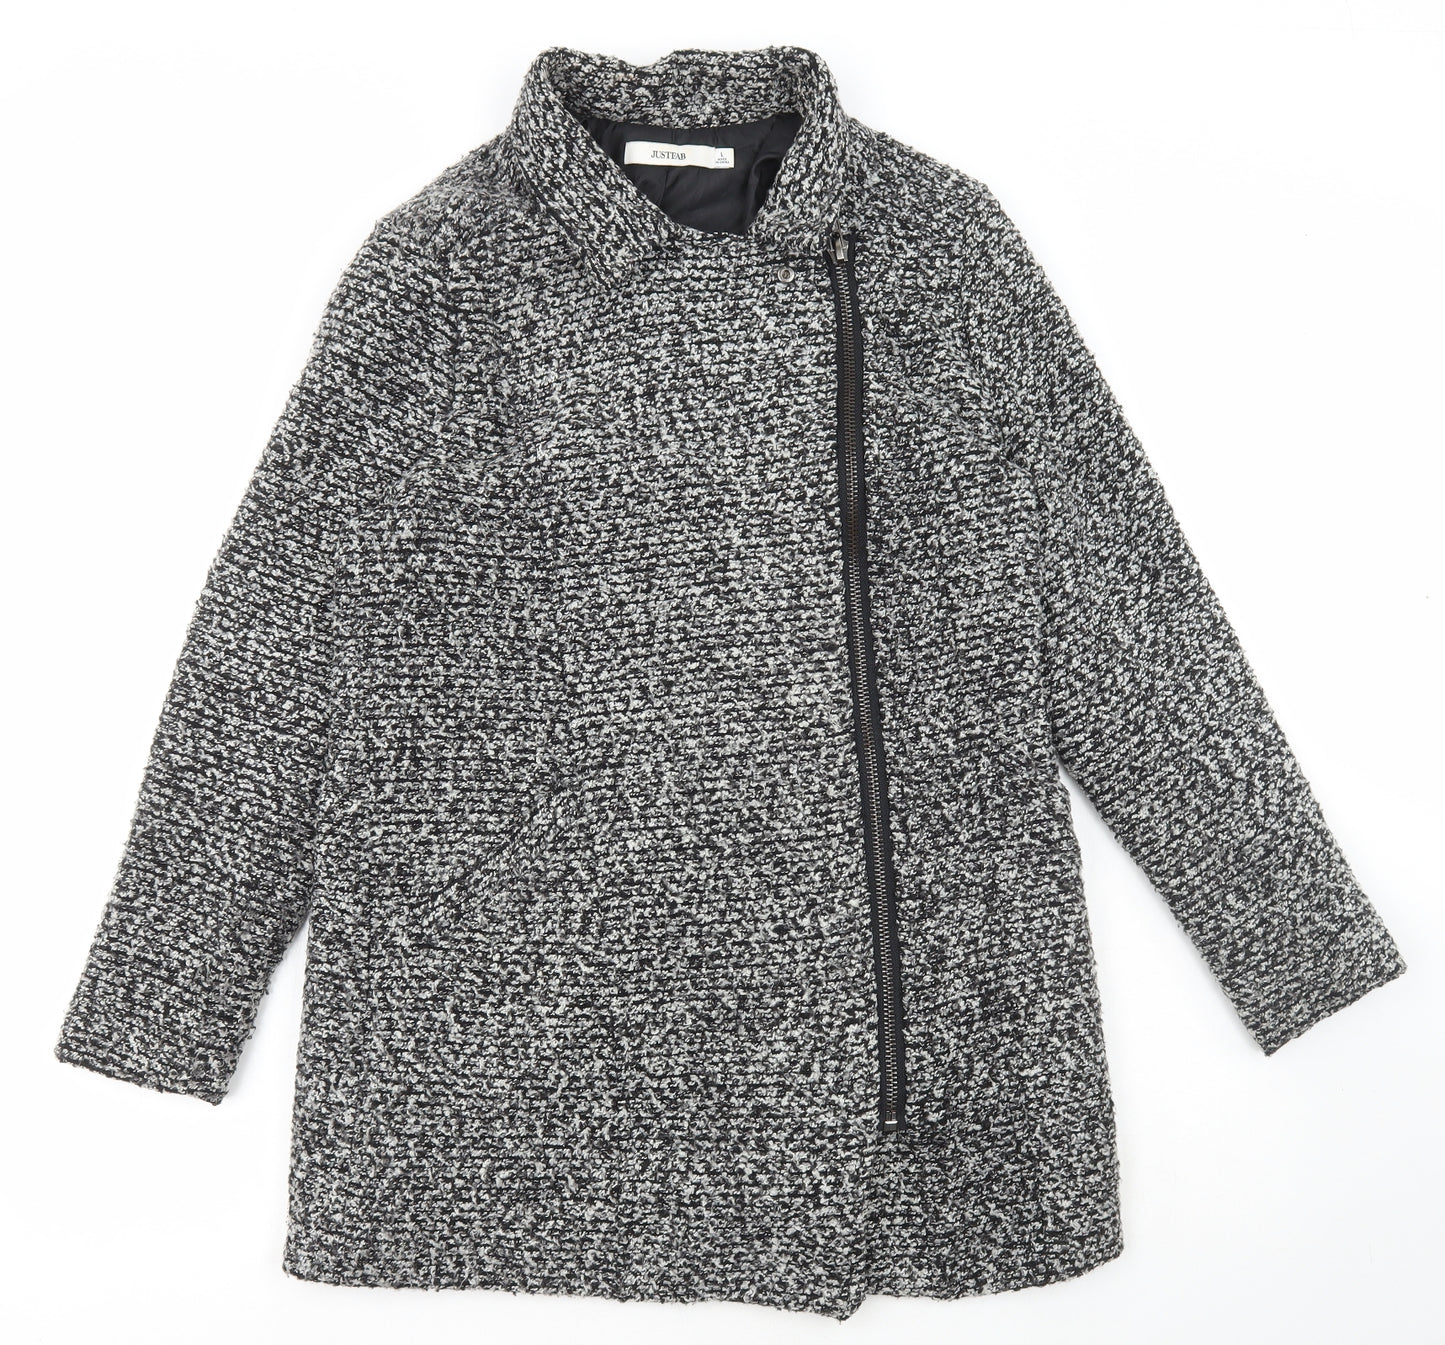 JustFab Womens Grey Jacket Coat Size L